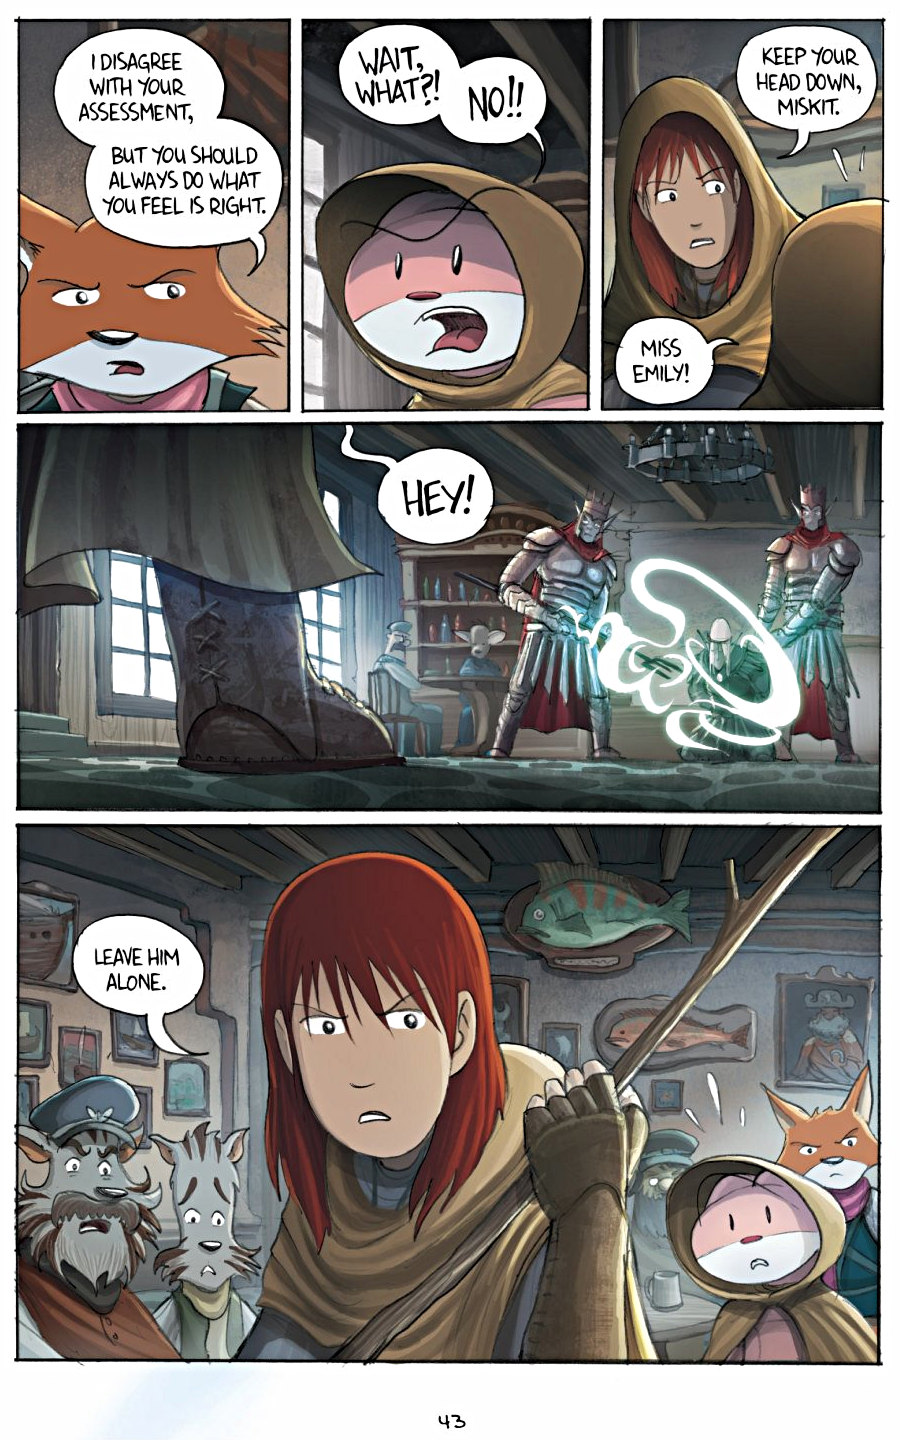 page 43 of amulet 3 cloud searchers graphic novel by kazu kibuishi